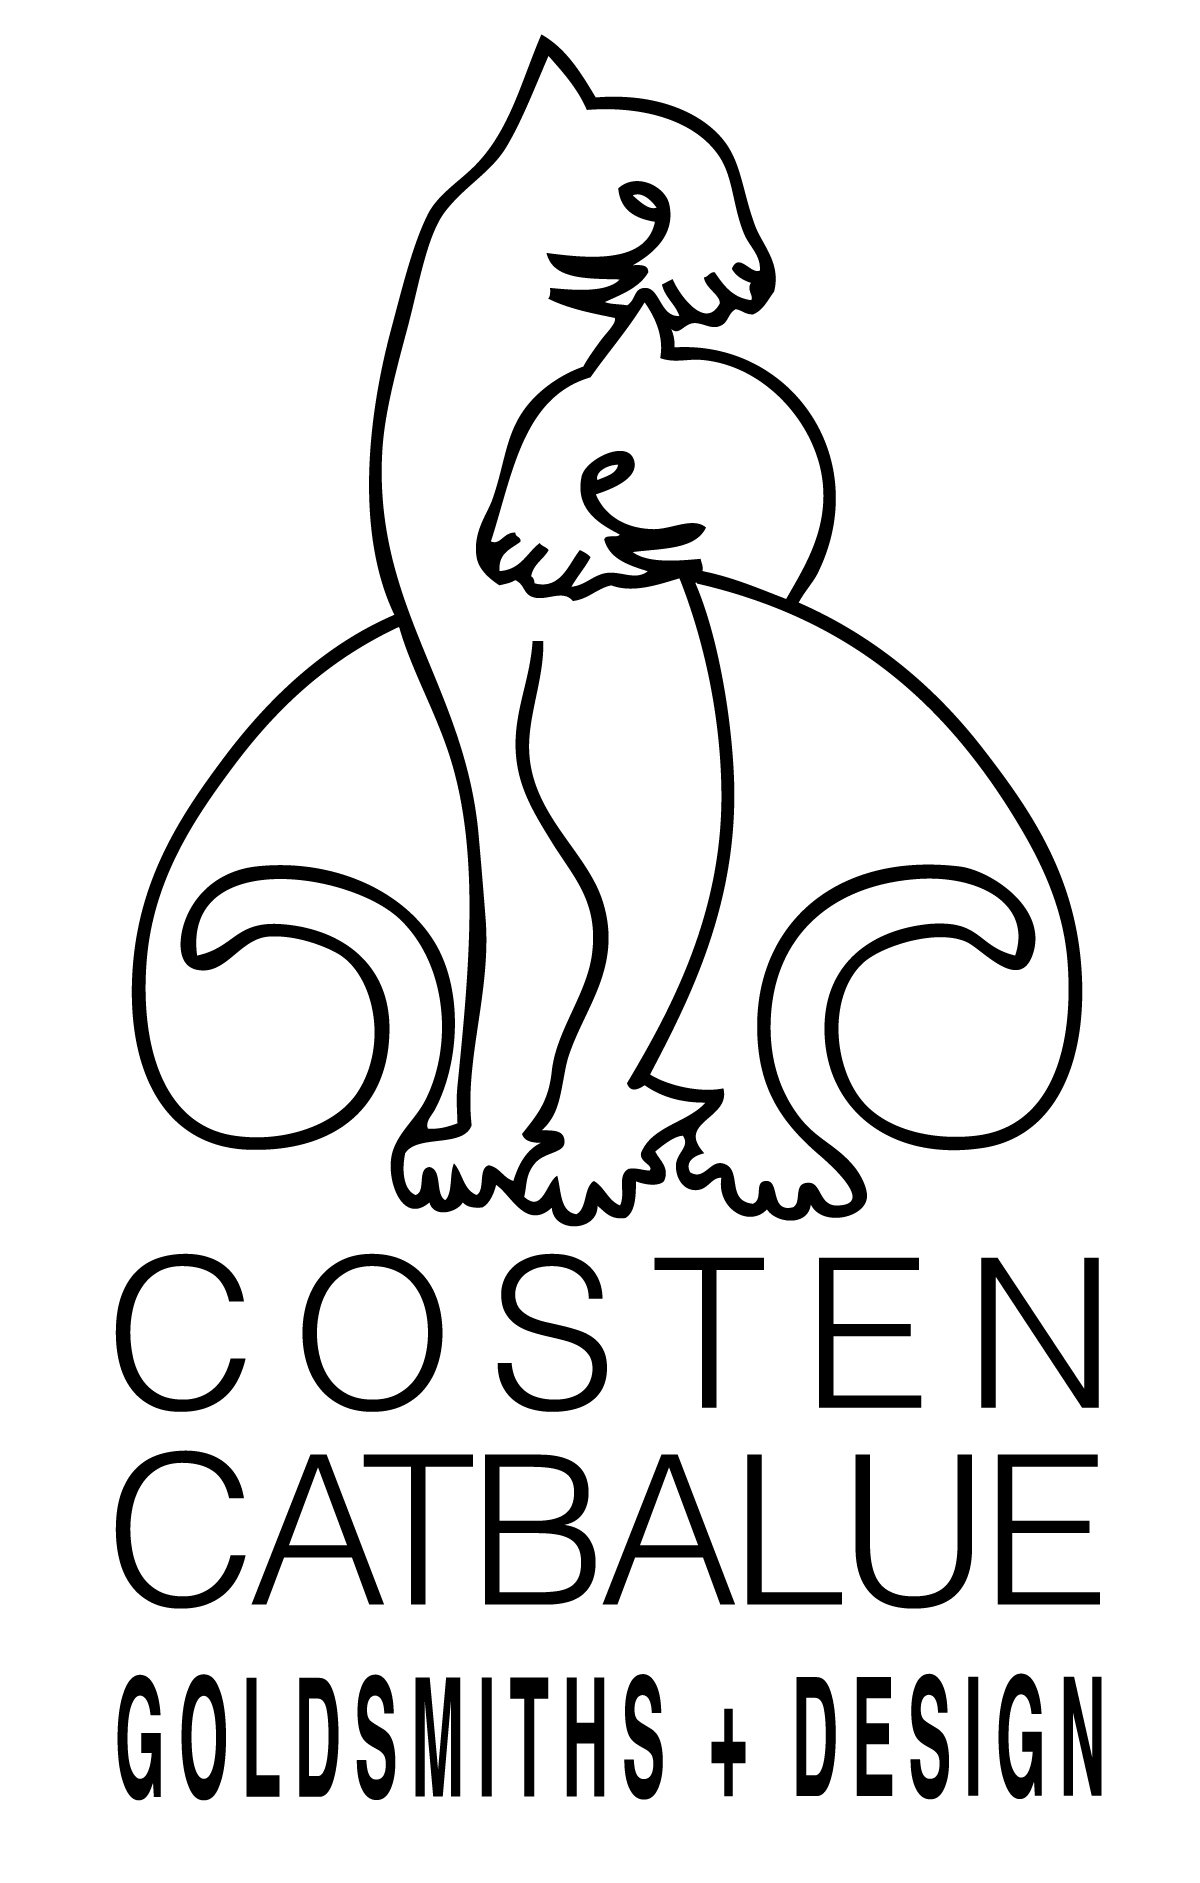 Costen Catbalue logo large.jpg